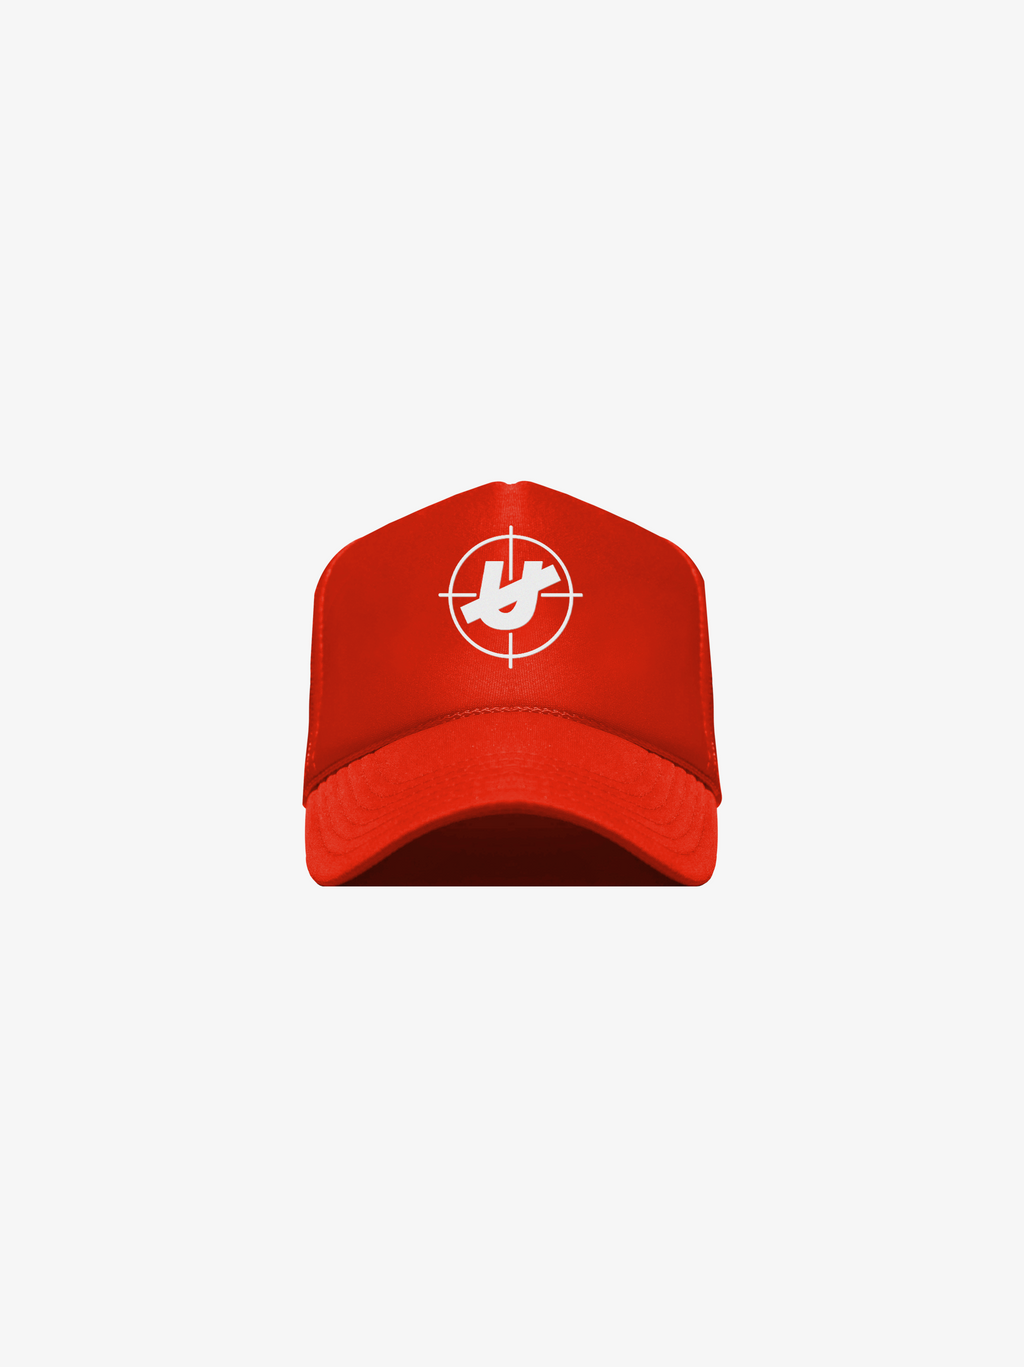 Untamed Scope Red Trucker Hat